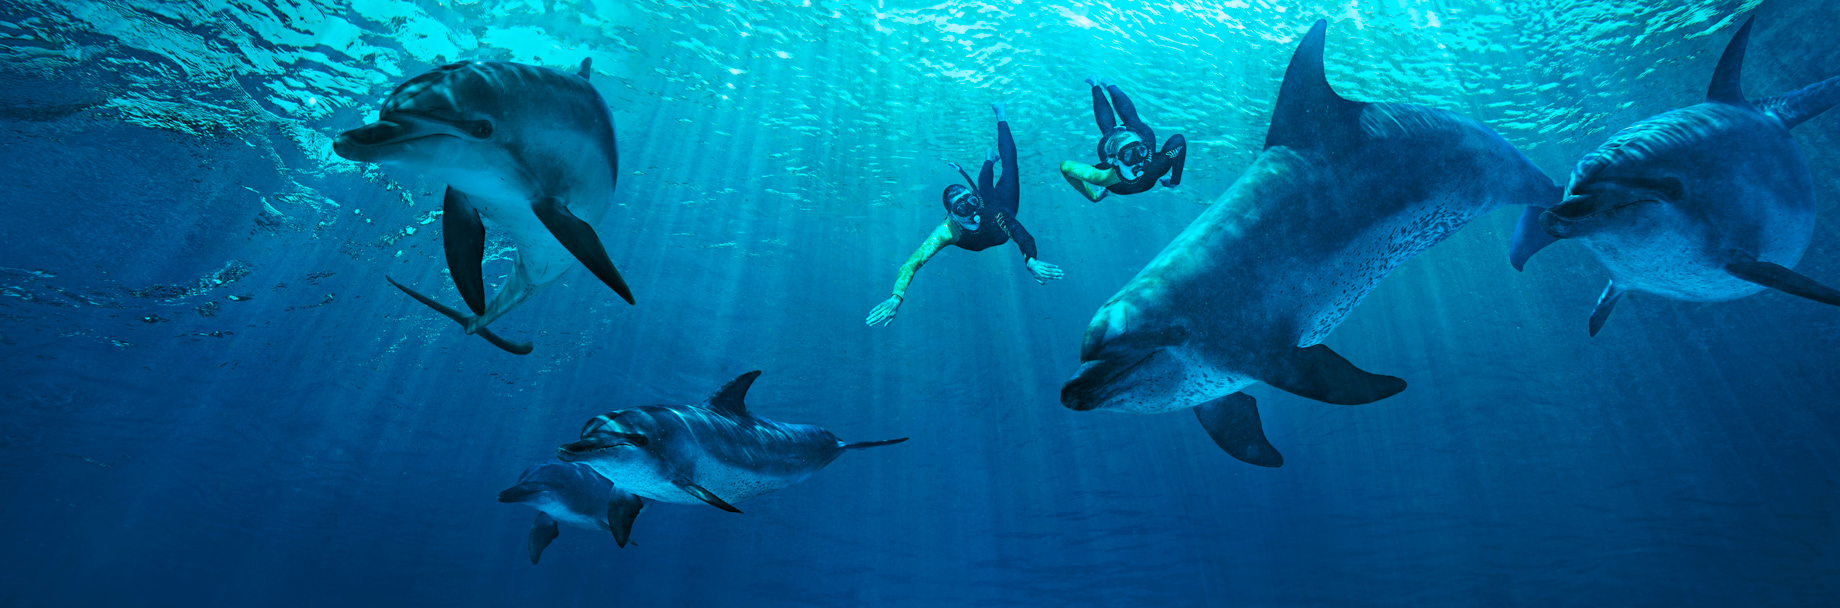 Atlantis The Palm Resort - Crescent Rd, Dubai, UAE - Underwater Dolphin Snorkel